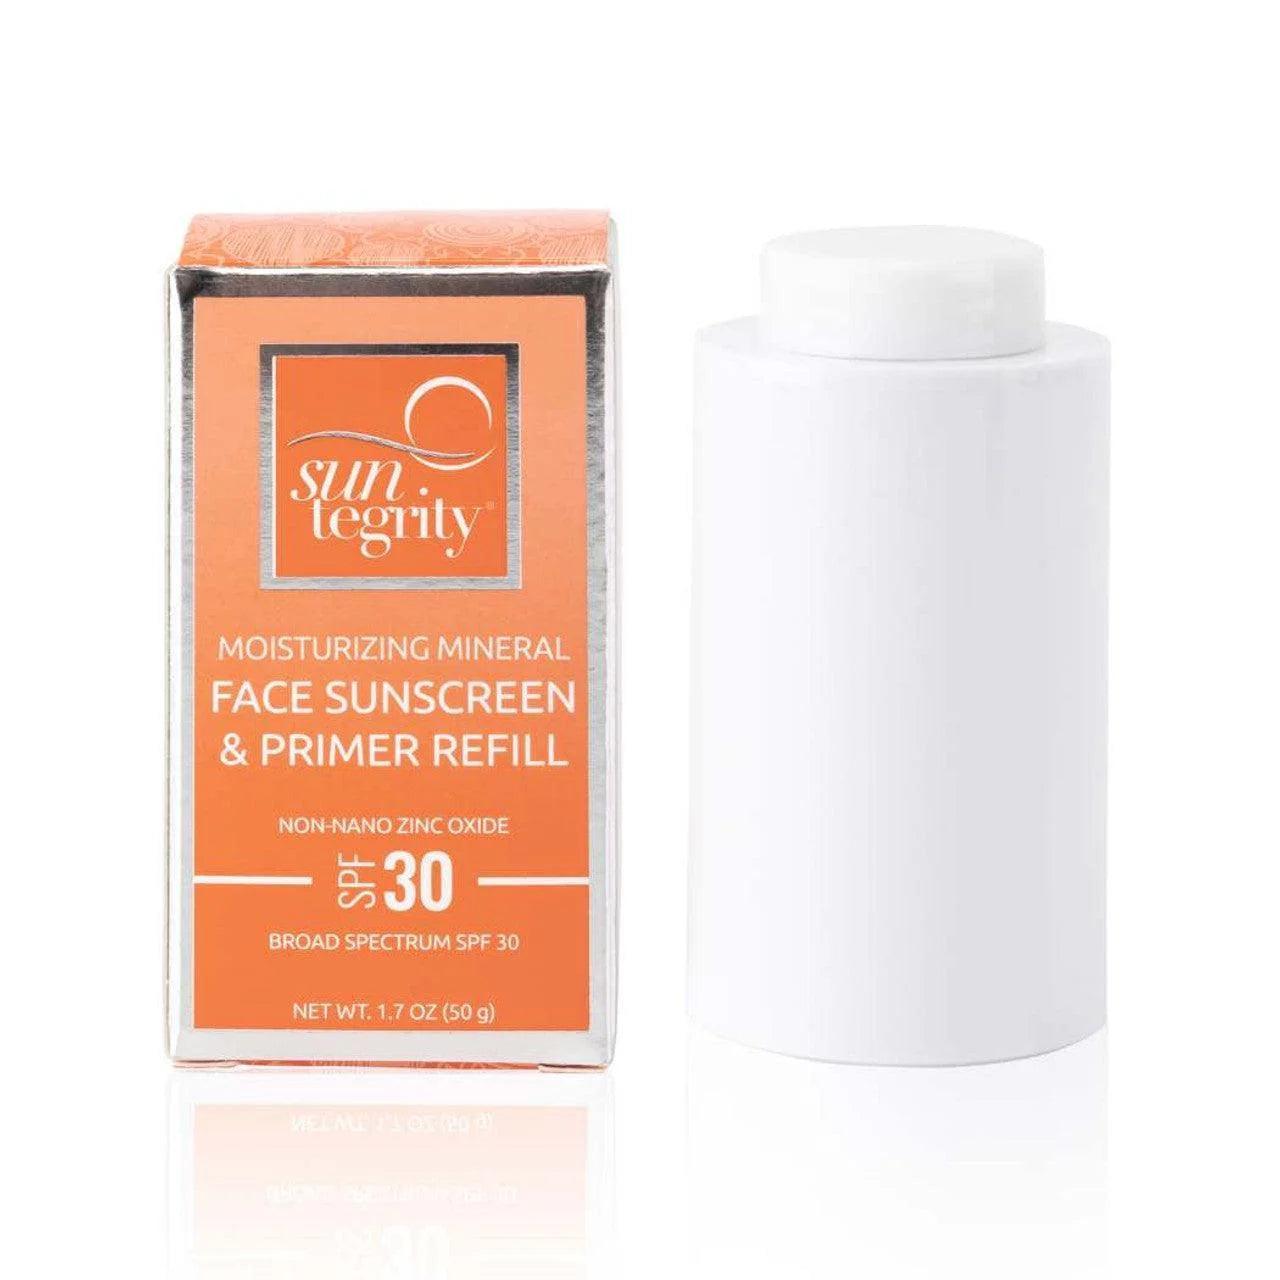 Suntegrity Moisturizing Mineral Face Sunscreen & Primer, Broad Spectrum SPF 30 50ml by Love Nature